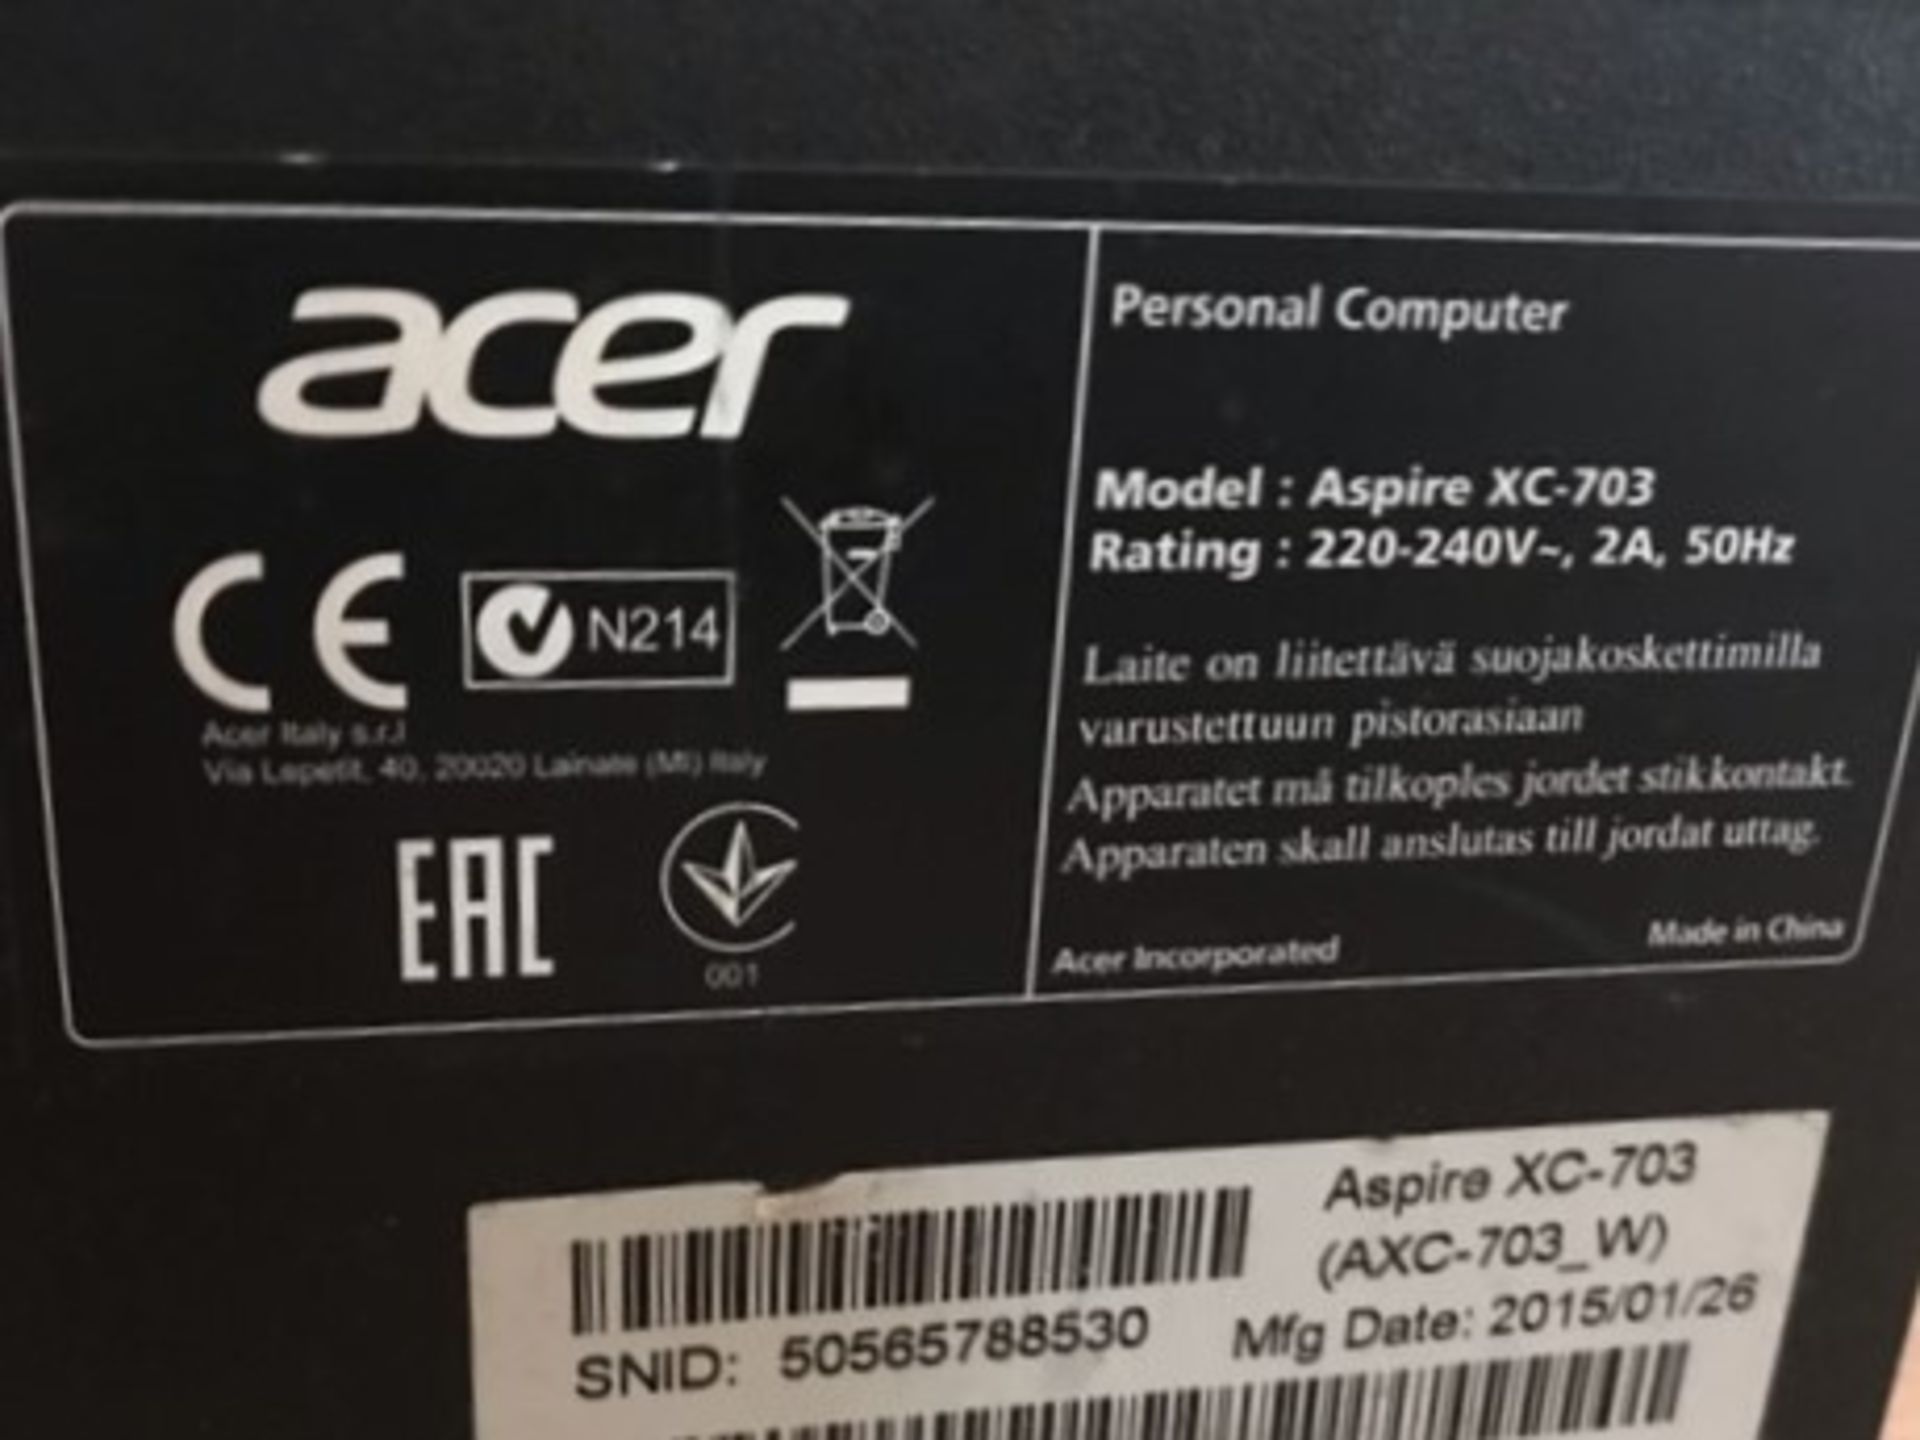 Acer XC-703 Intel Pentium J2900 personal computer - Image 3 of 3